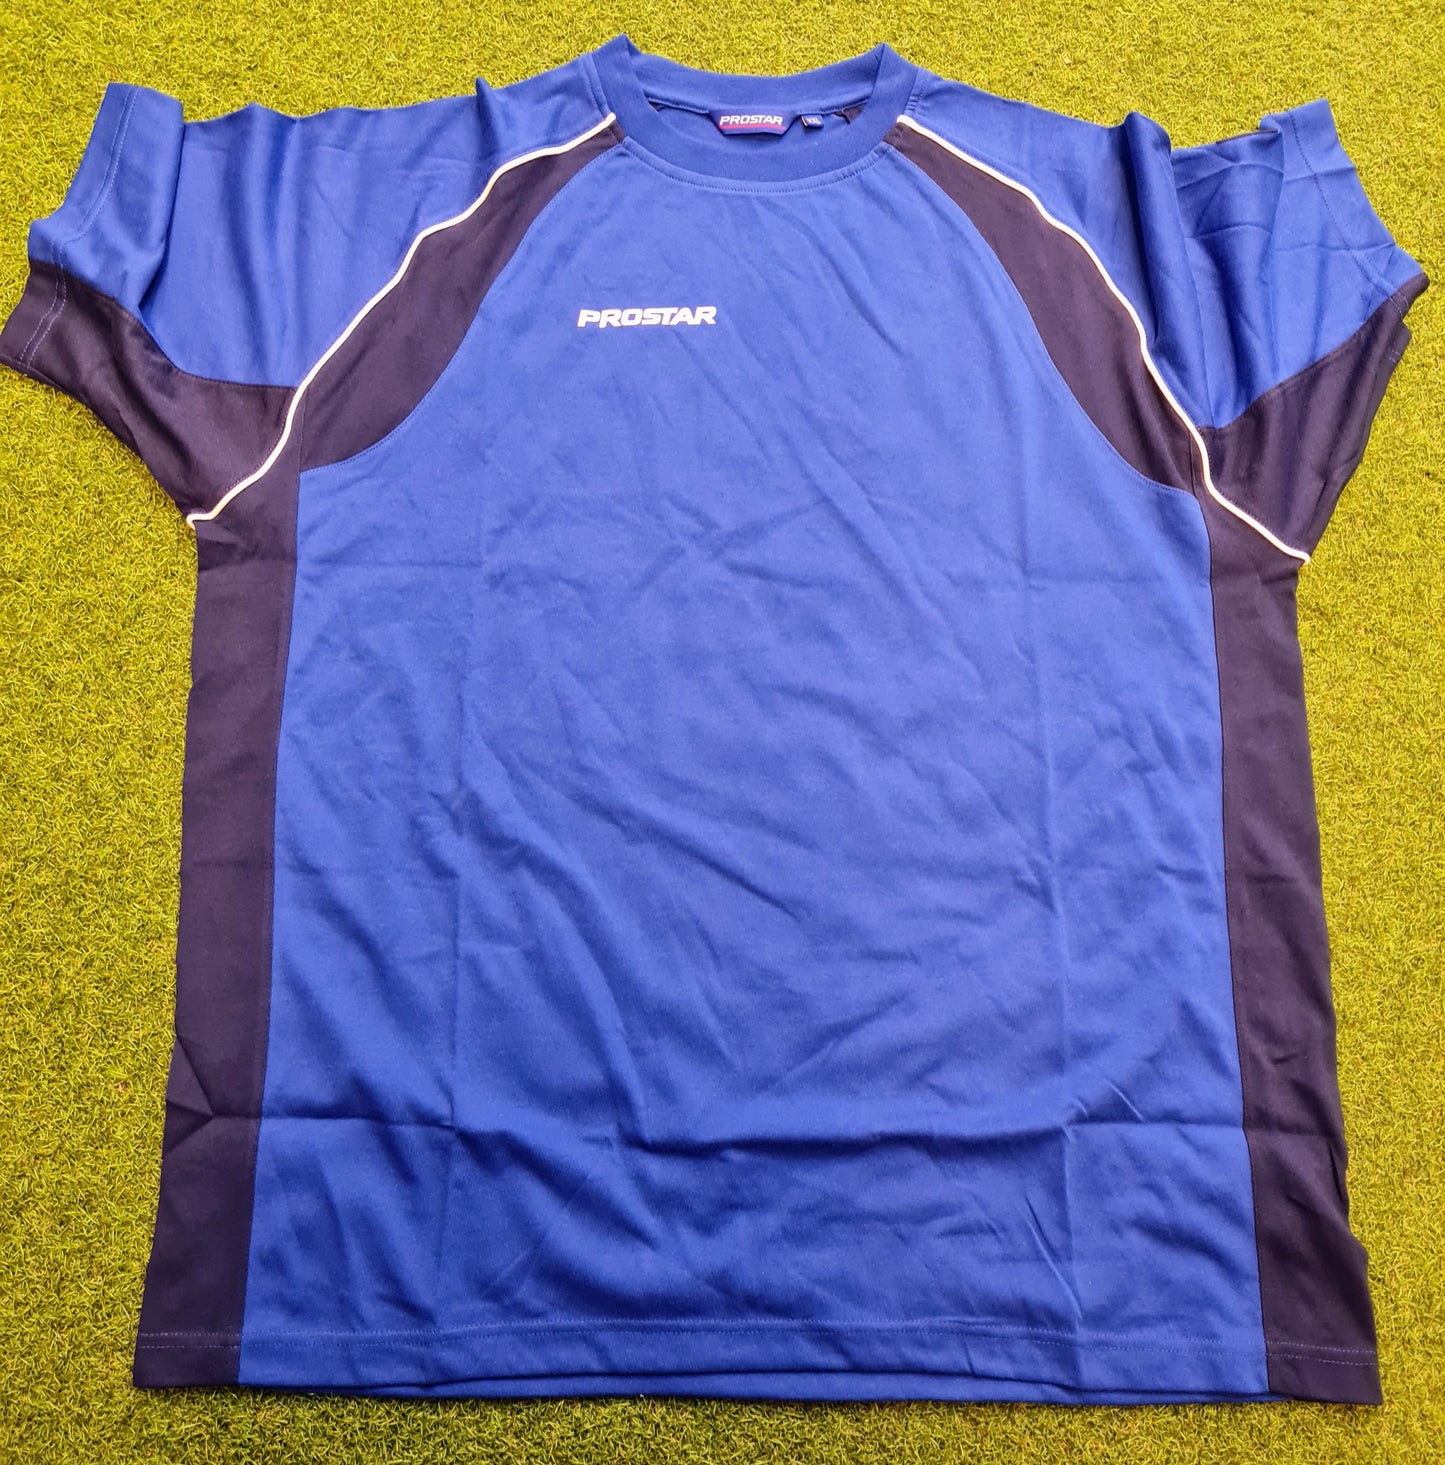 CLEARANCE Men's ProStar blue football jersey XX large